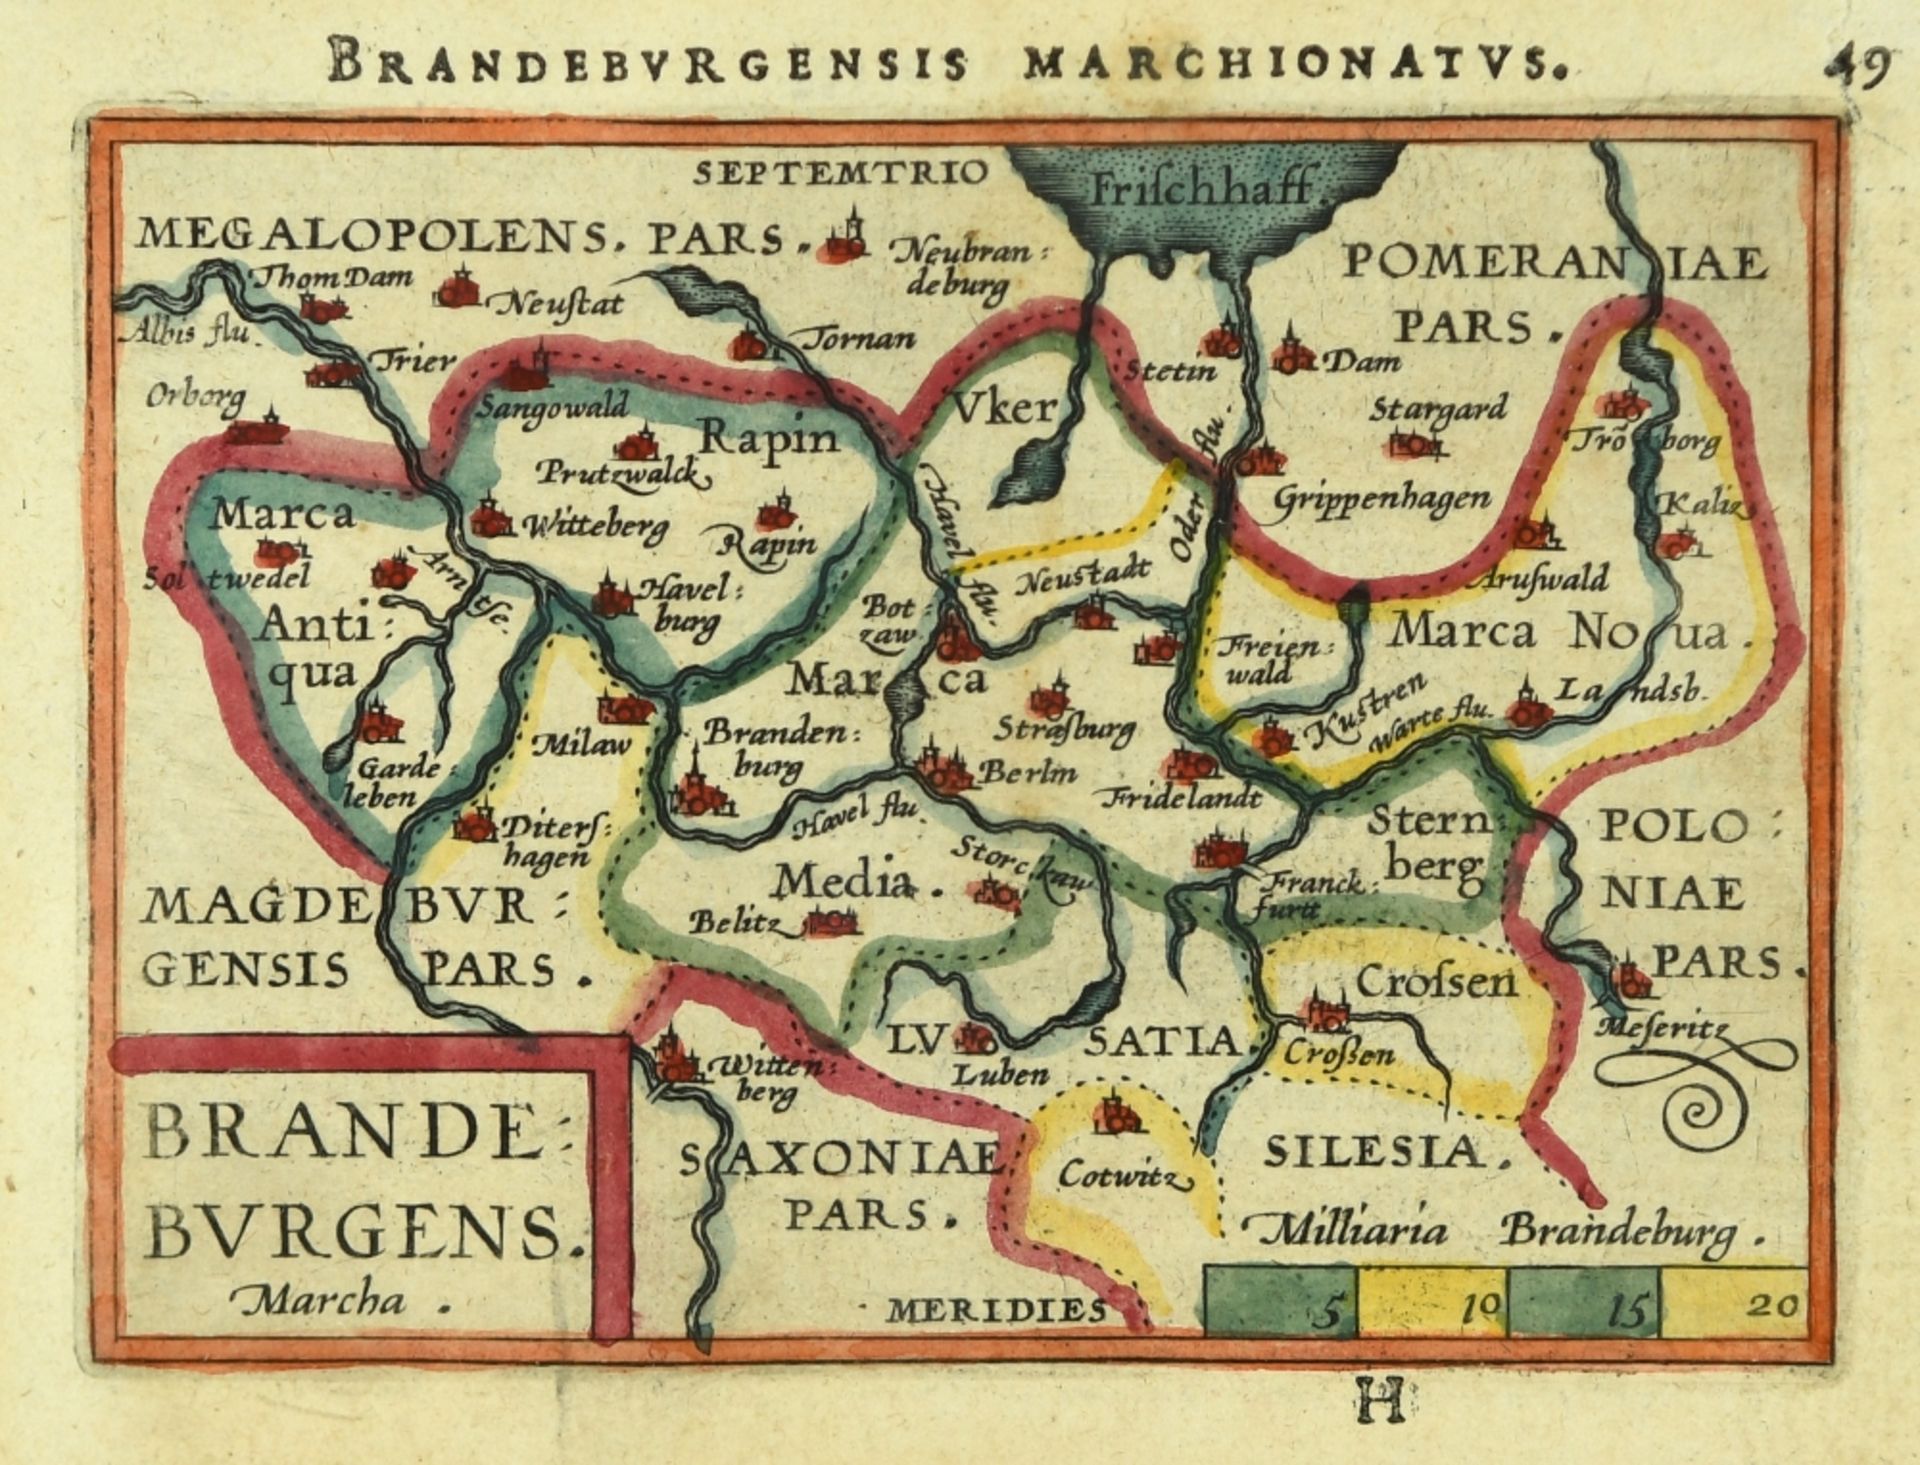 Landkarte "Brandenburgensis Marchionatus" - Image 2 of 2